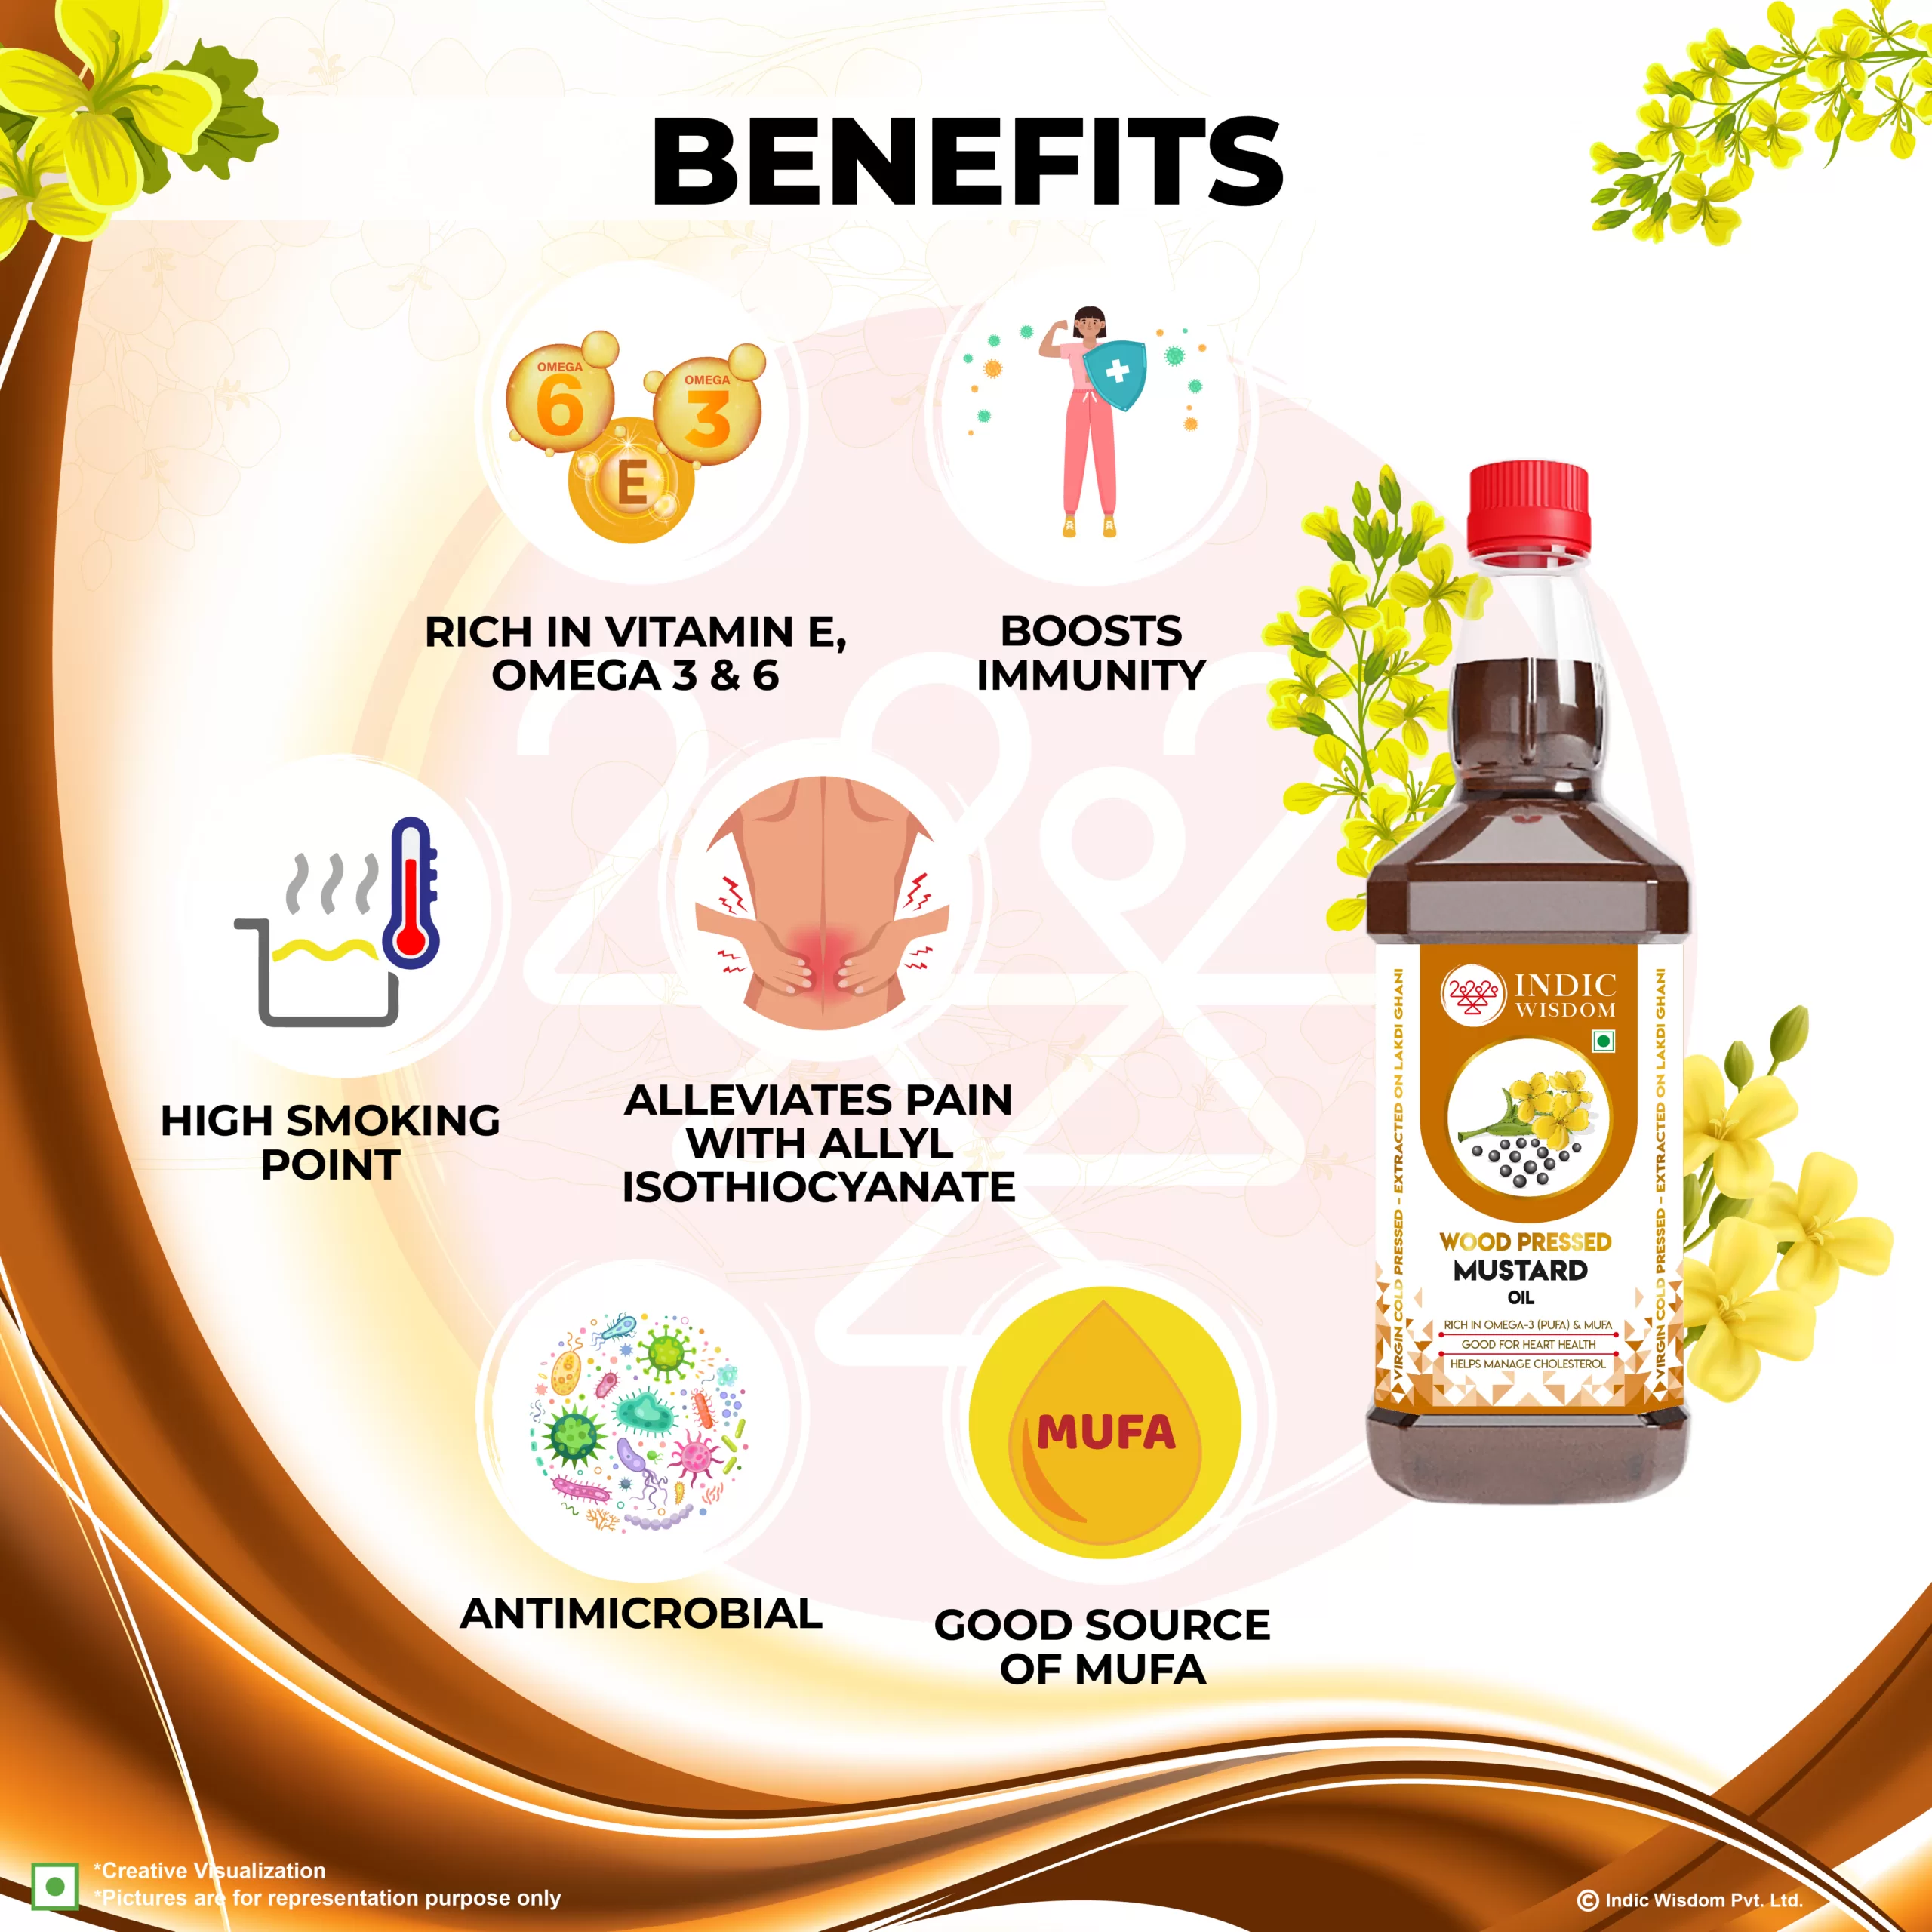 Benefits of wood pressed mustard oil